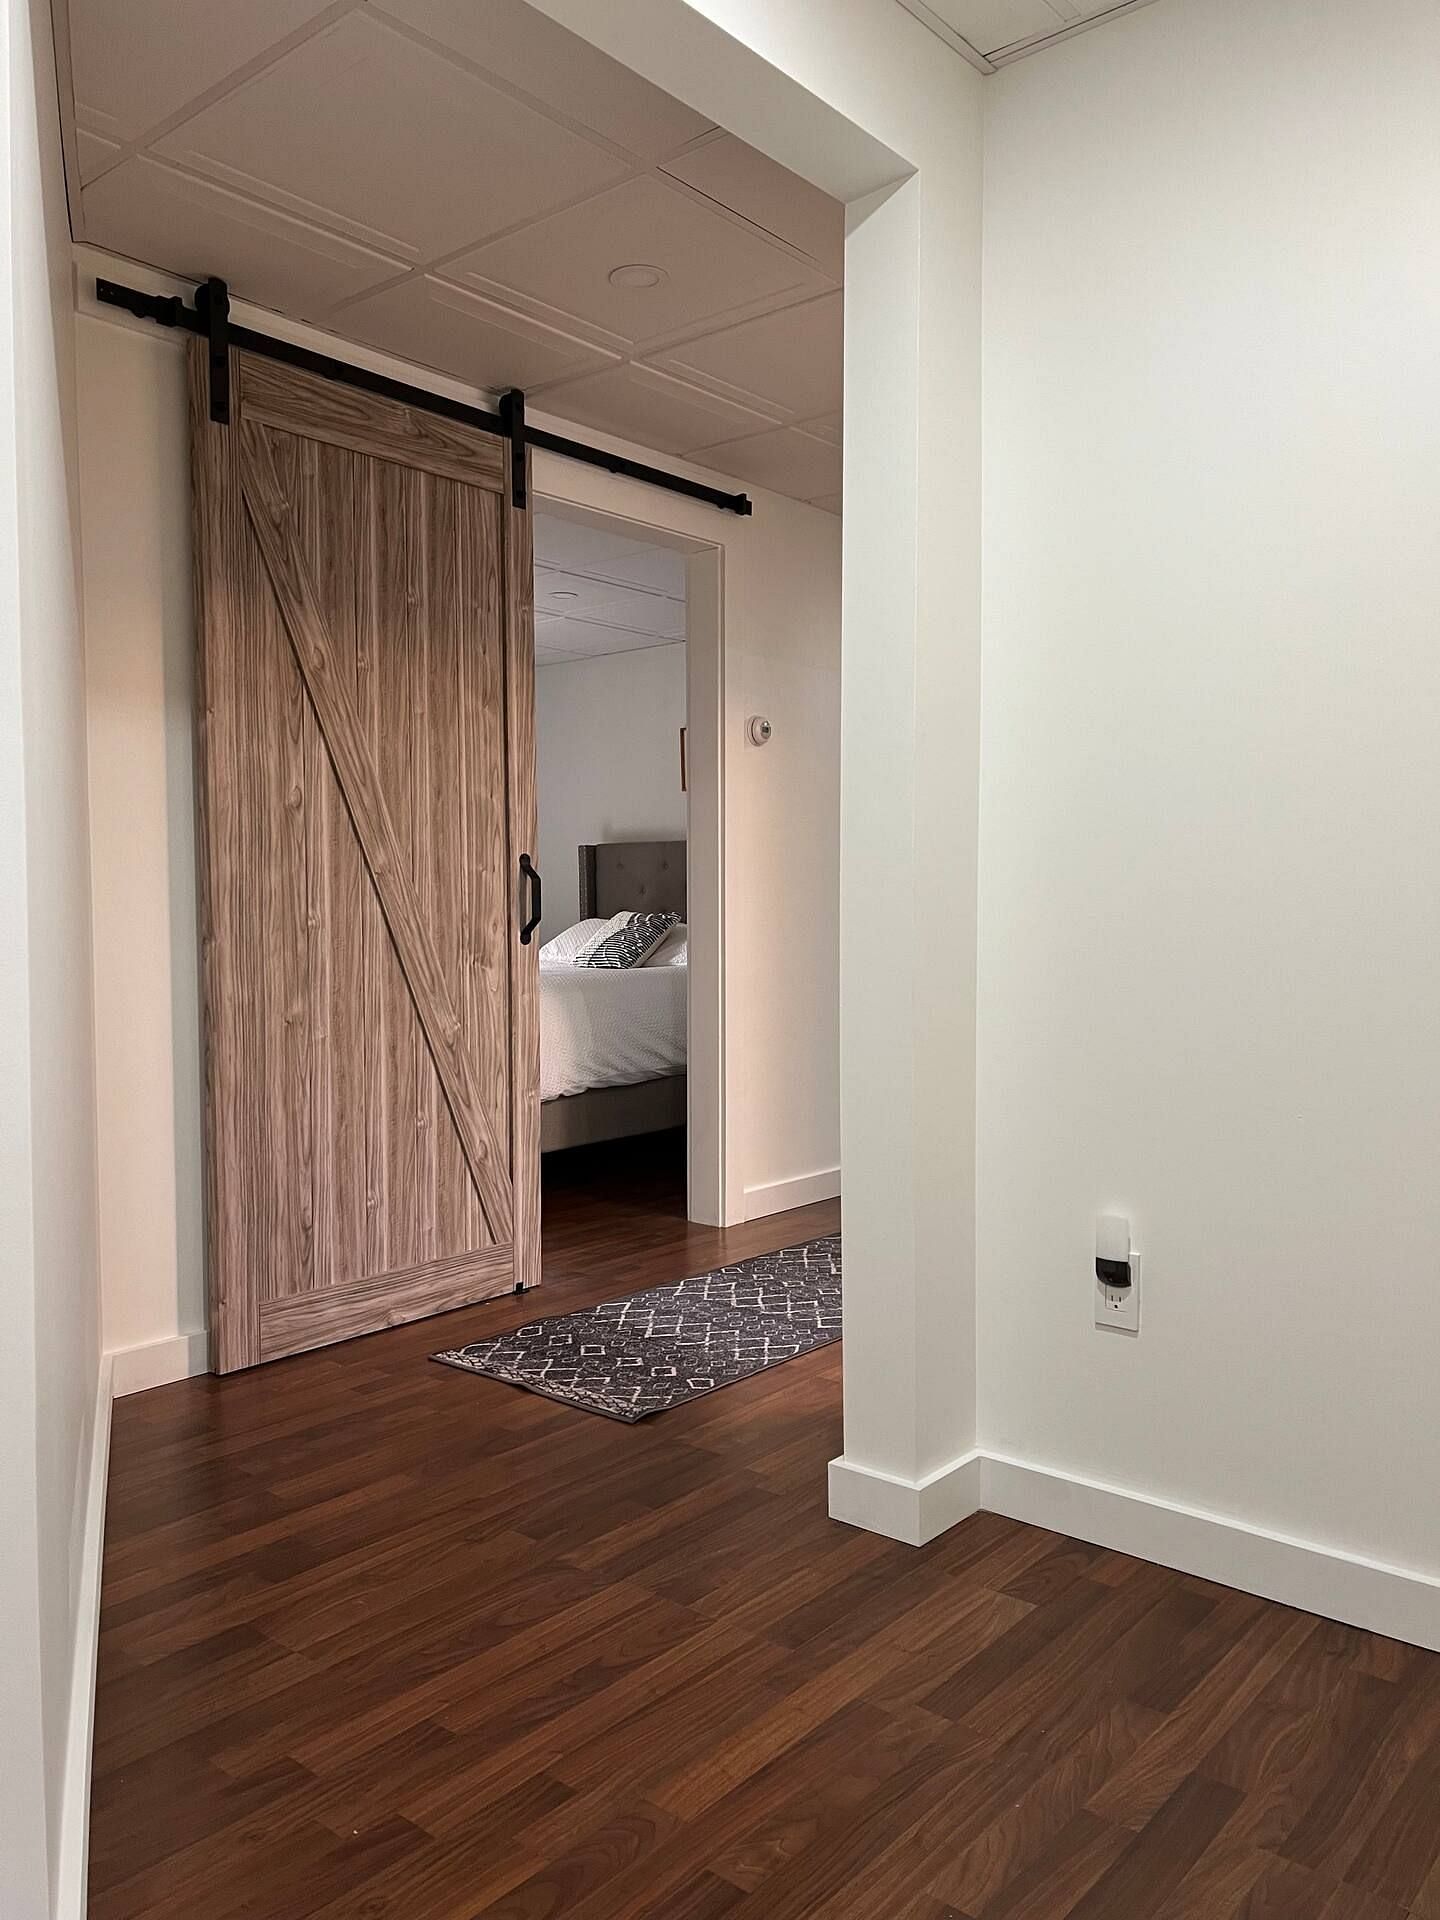 JWguest Apartment at Gardiner, New York | Halcyon Home | Jwbnb no brobnb 6